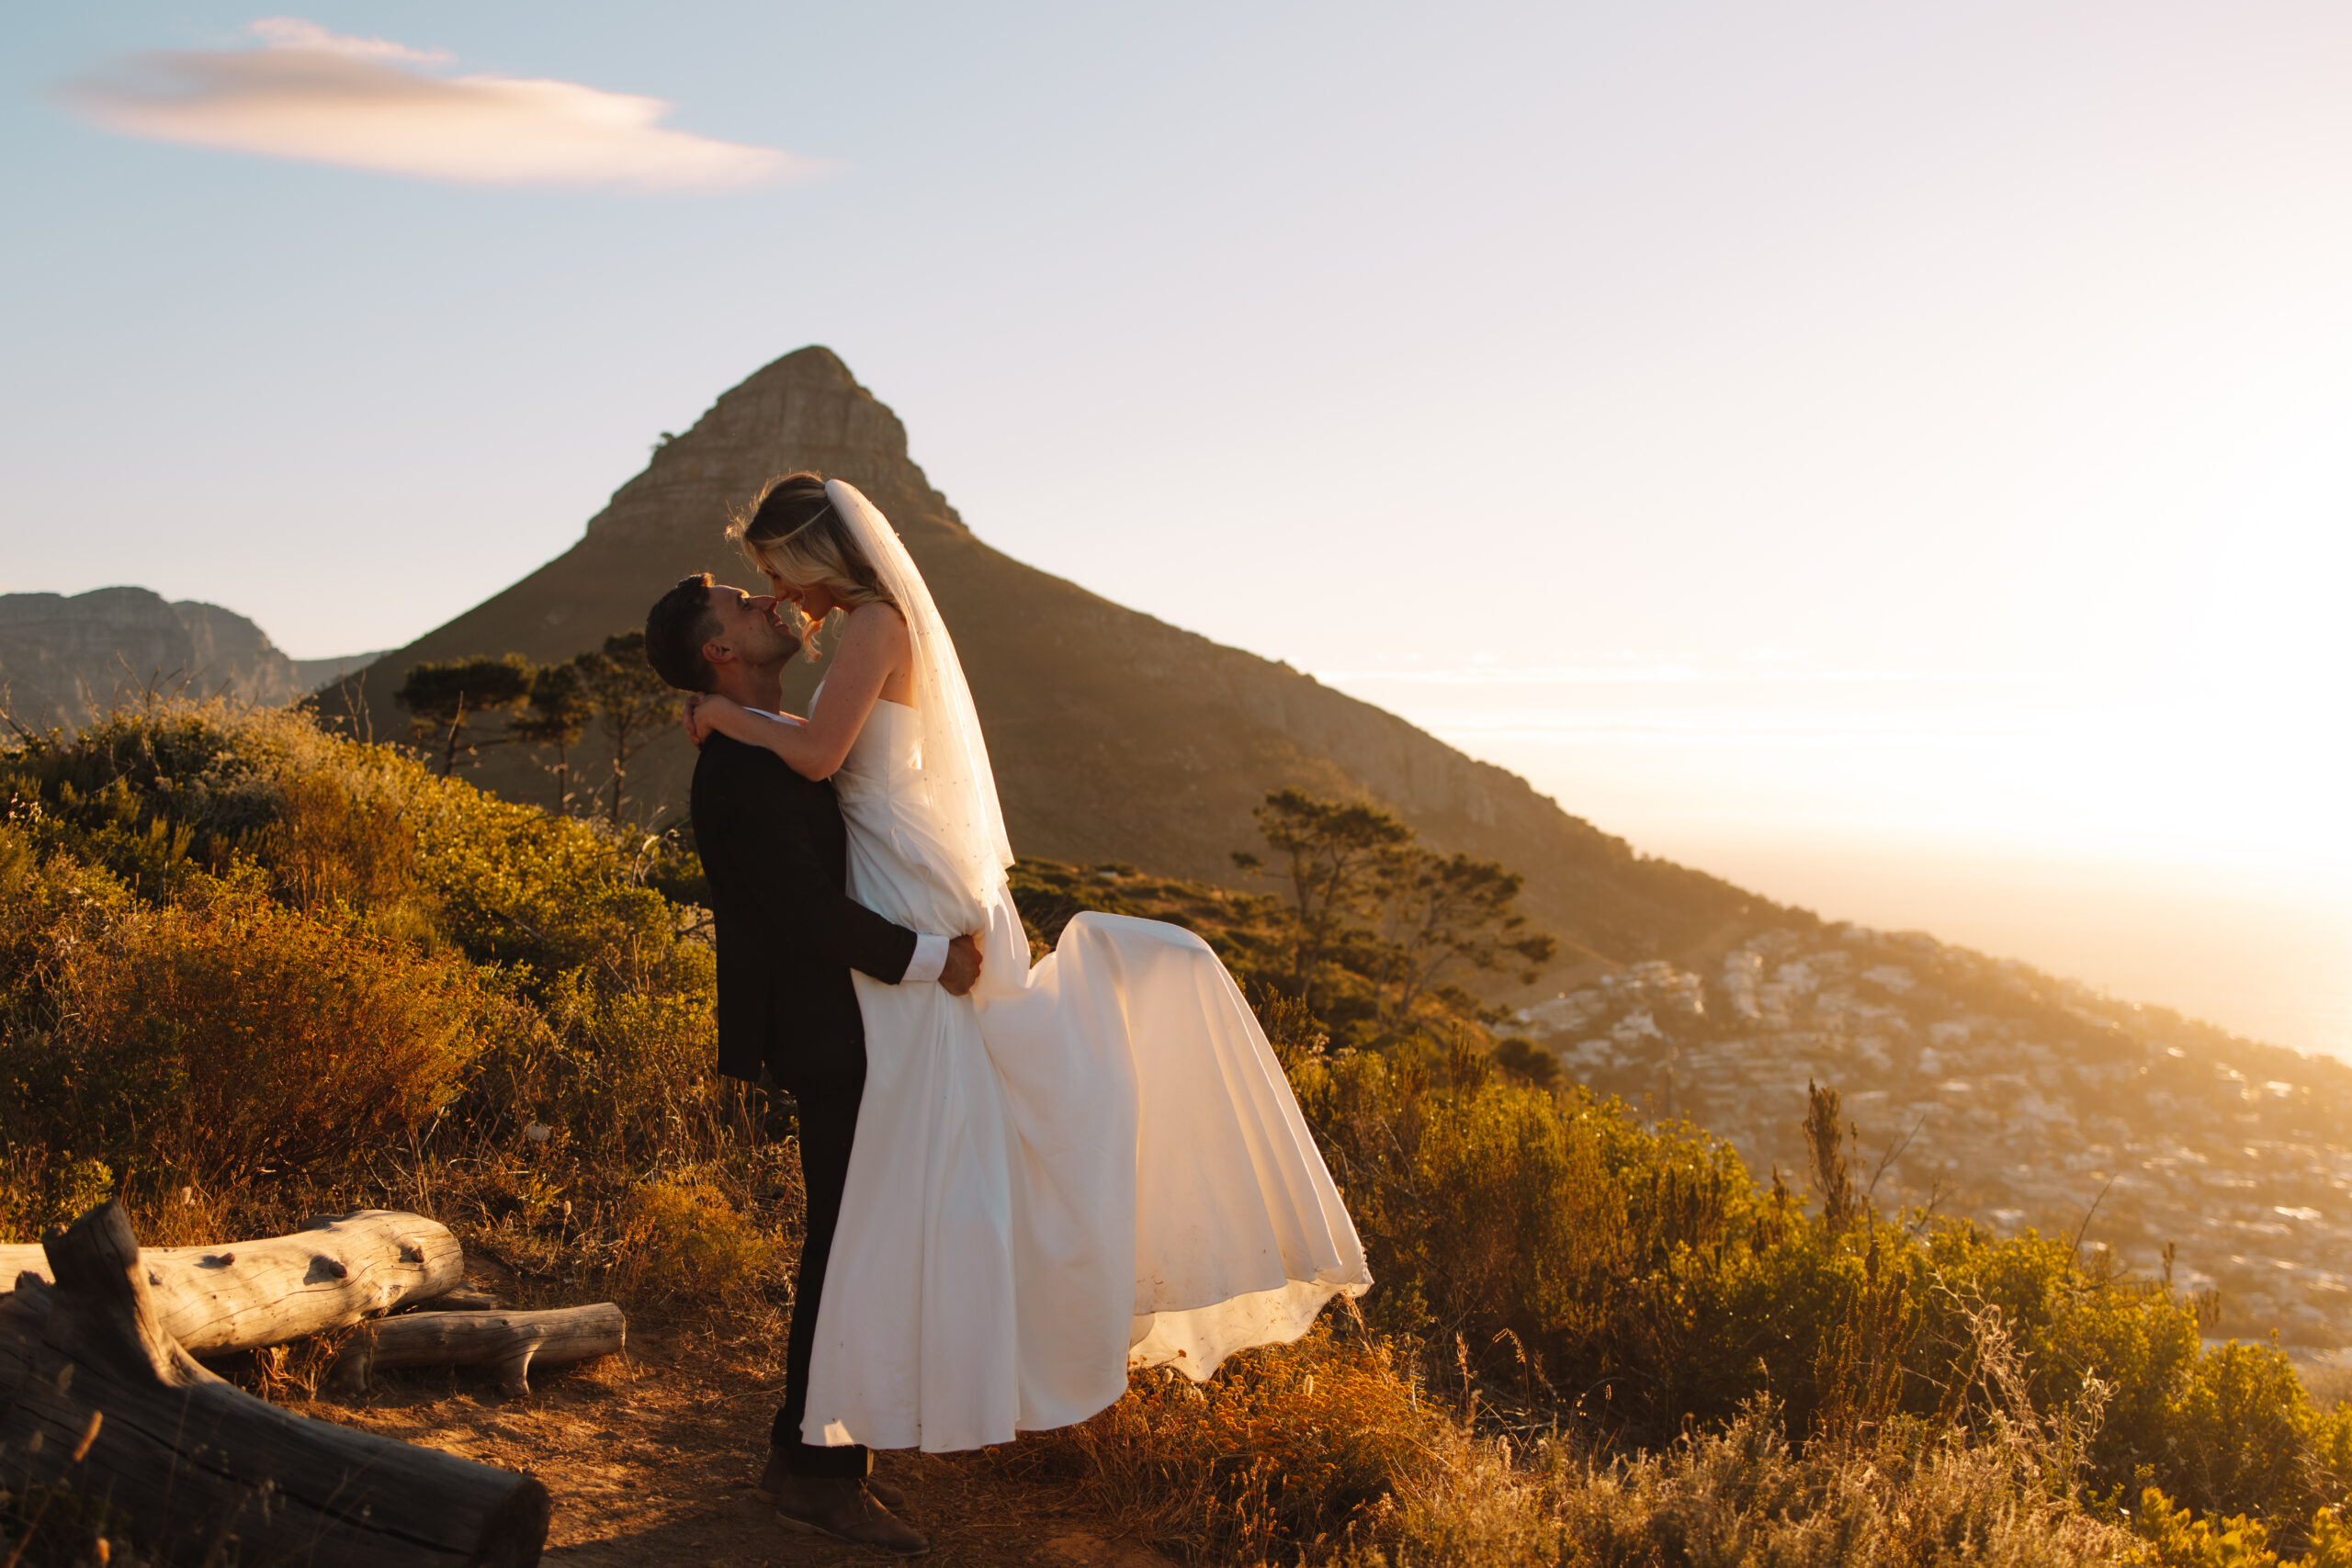 All inclusive safari elopement in South Africa